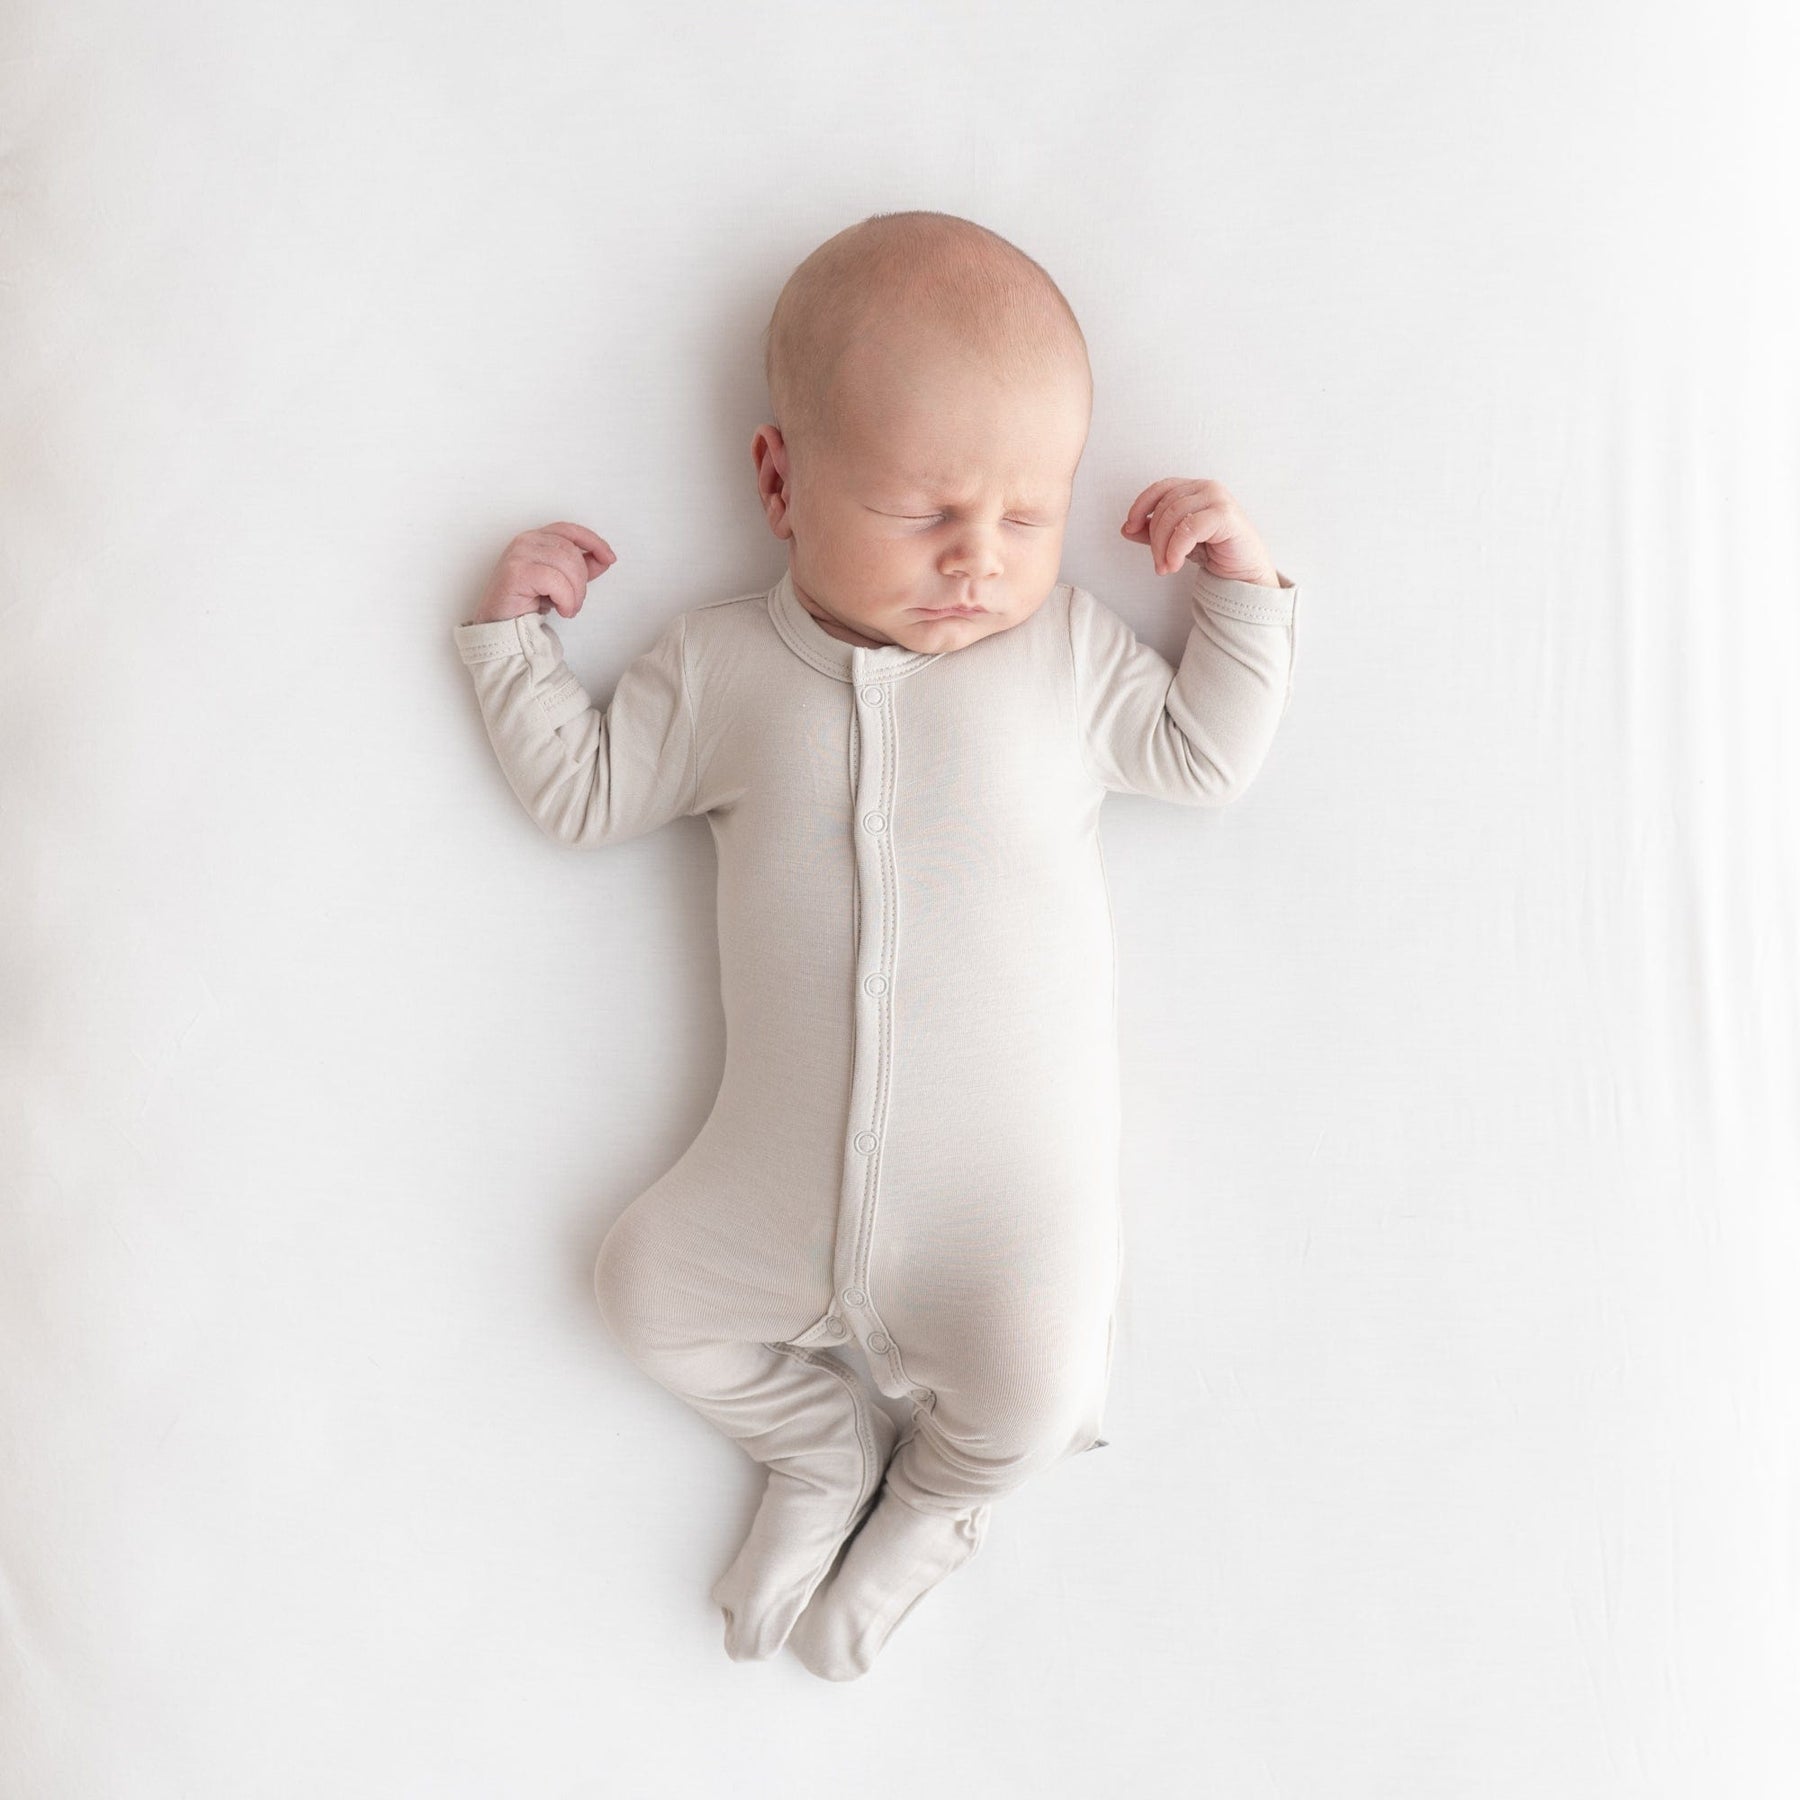 Infant wearing Kyte Baby Snap Footie pajamas in Oat